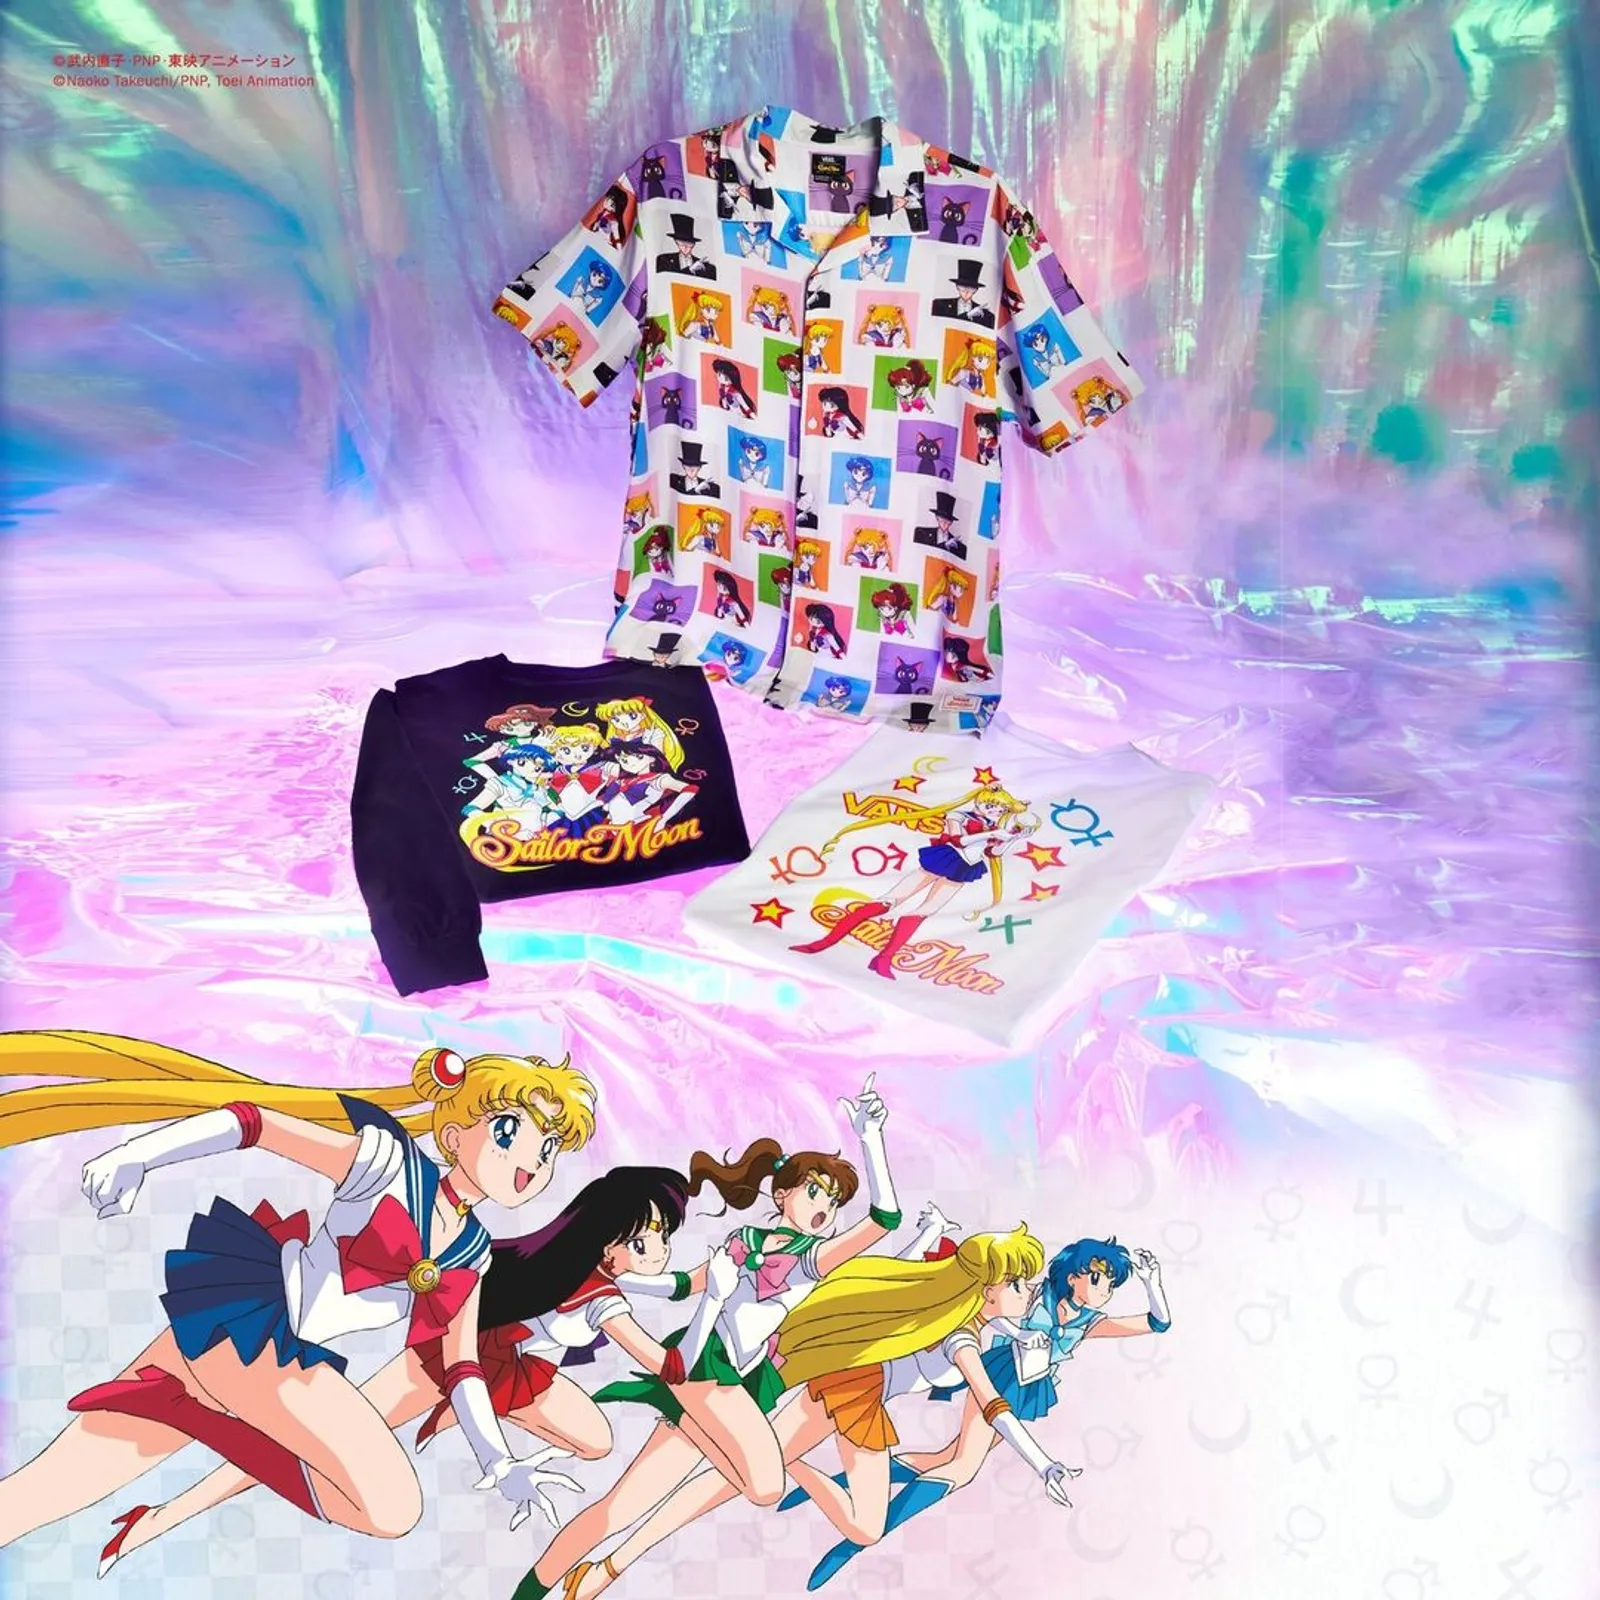 Intip Koleksi Gemas Vans dan Sailor Moon